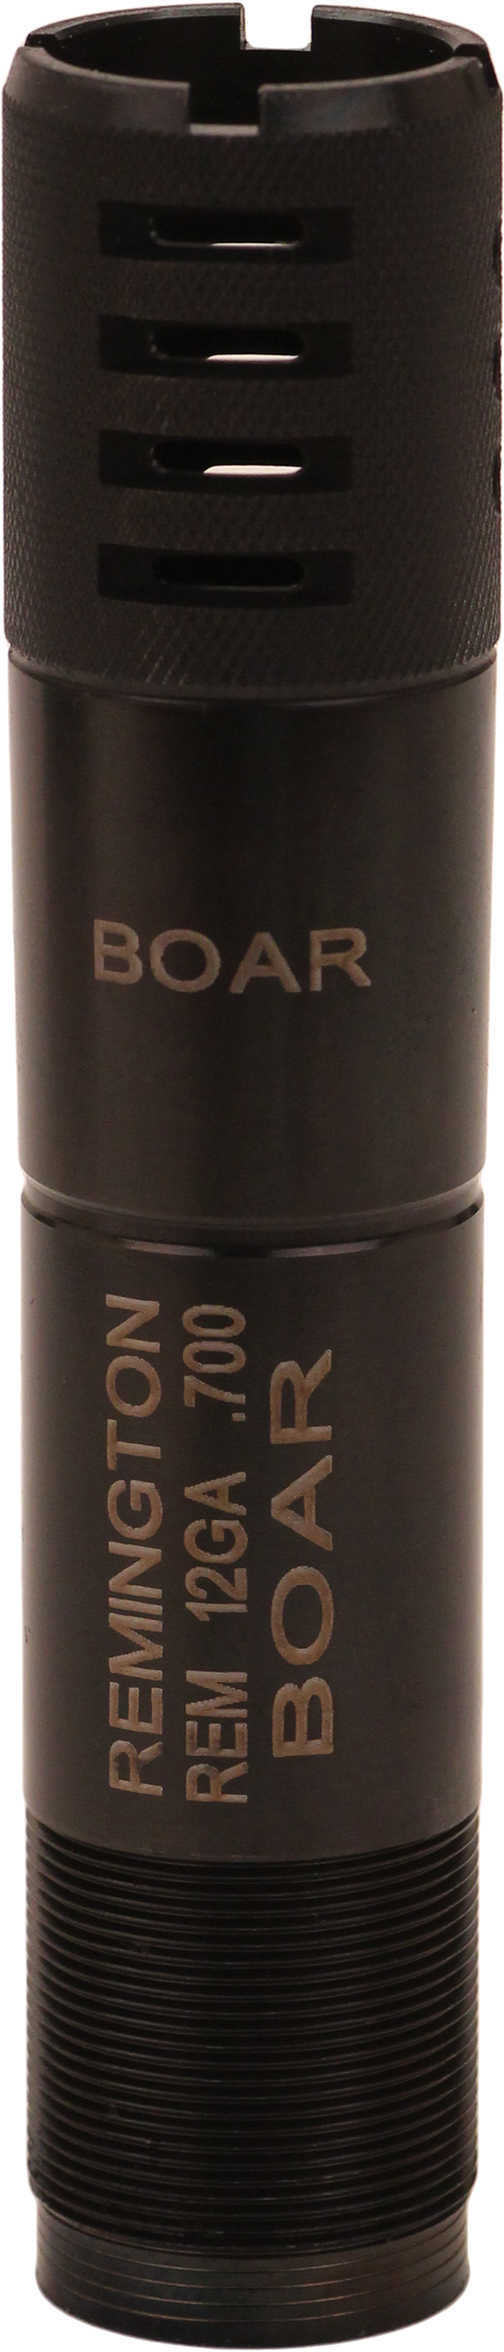 Remington Accessories Choke Tube 12 Gauge Hog "Pro Boar" Ported Extra Full Md: 19170